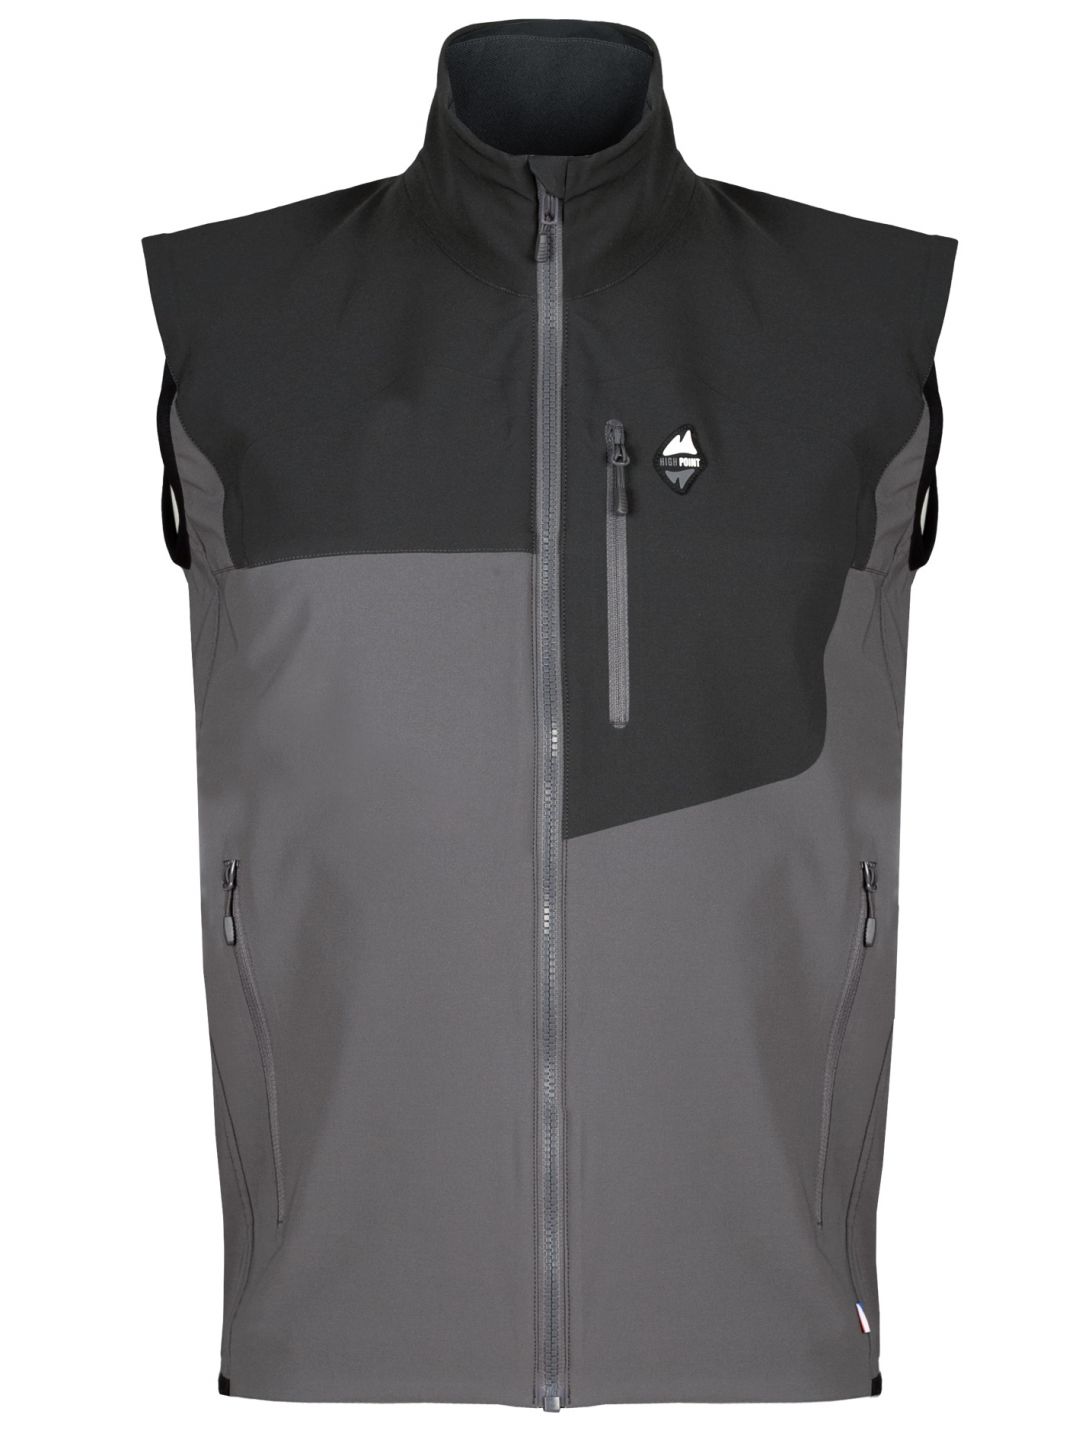 HIGH POINT Atom Vest Black/grey varianta: M